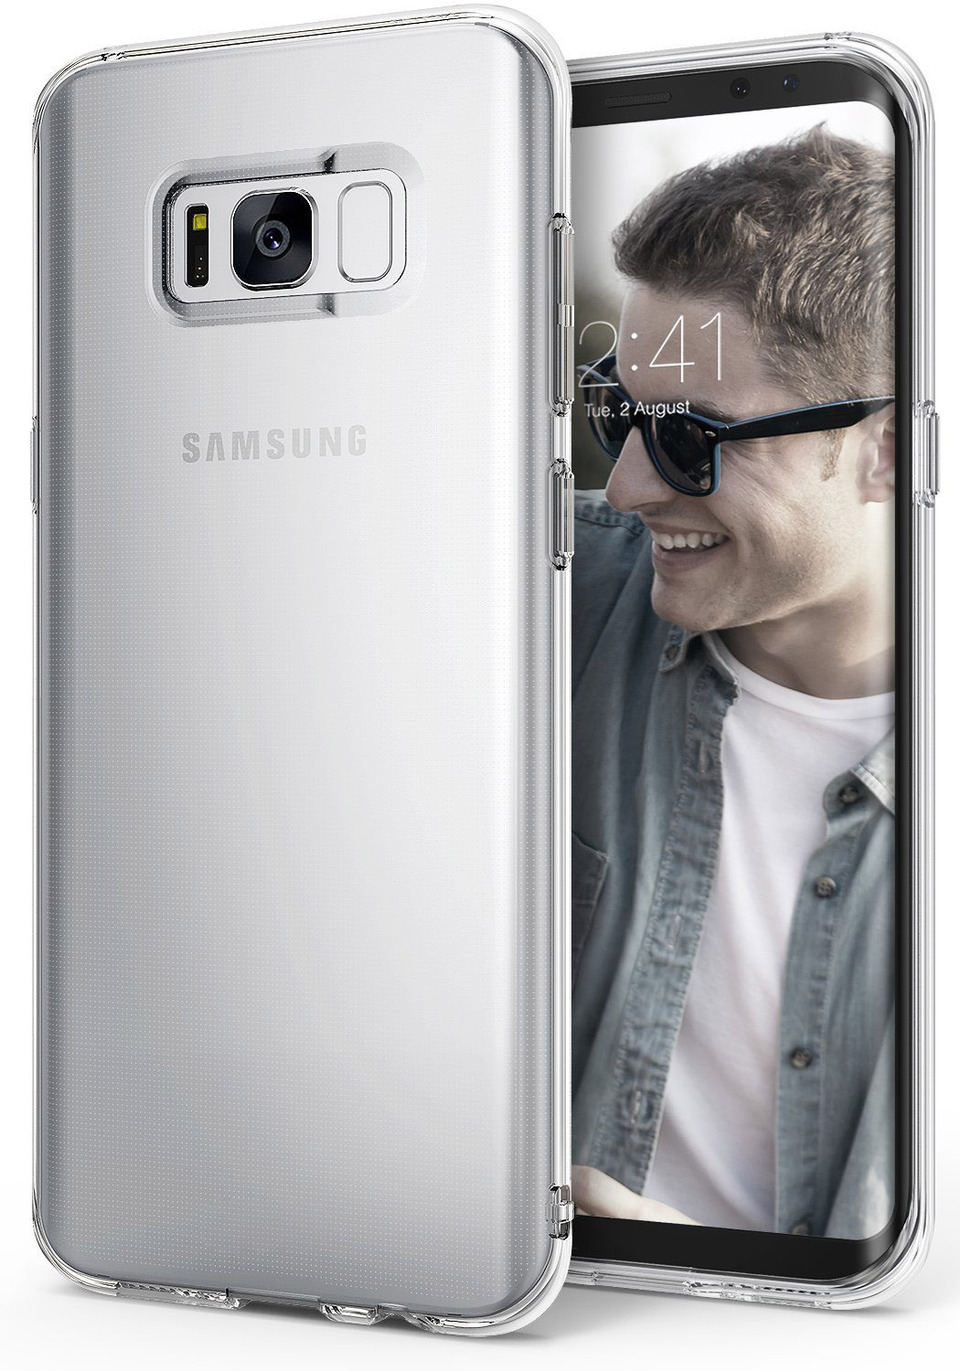 Fitwhiny Galaxy S8 S8 Plus用 クリア ケース クリアカバー発売中です スマホケース タブレット ケース カバー